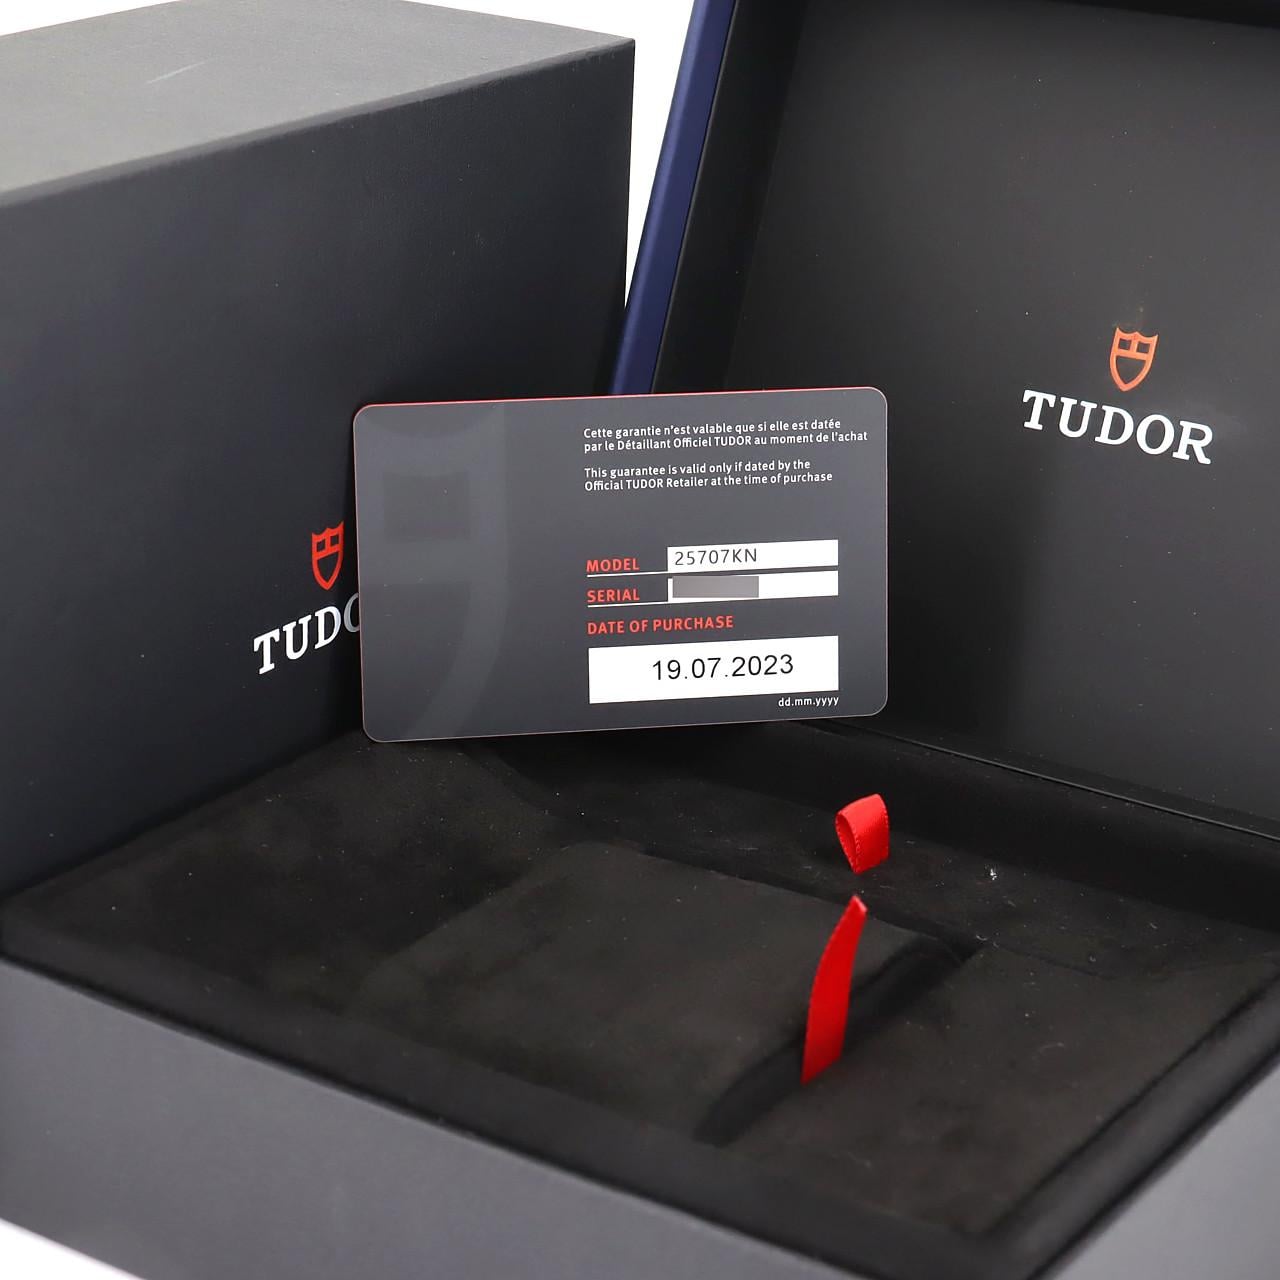 Tudor/Tudor Pelagos FXD “Alinghi Red Bull Racing” M25707KN-0001 Carbon Composite Automatic